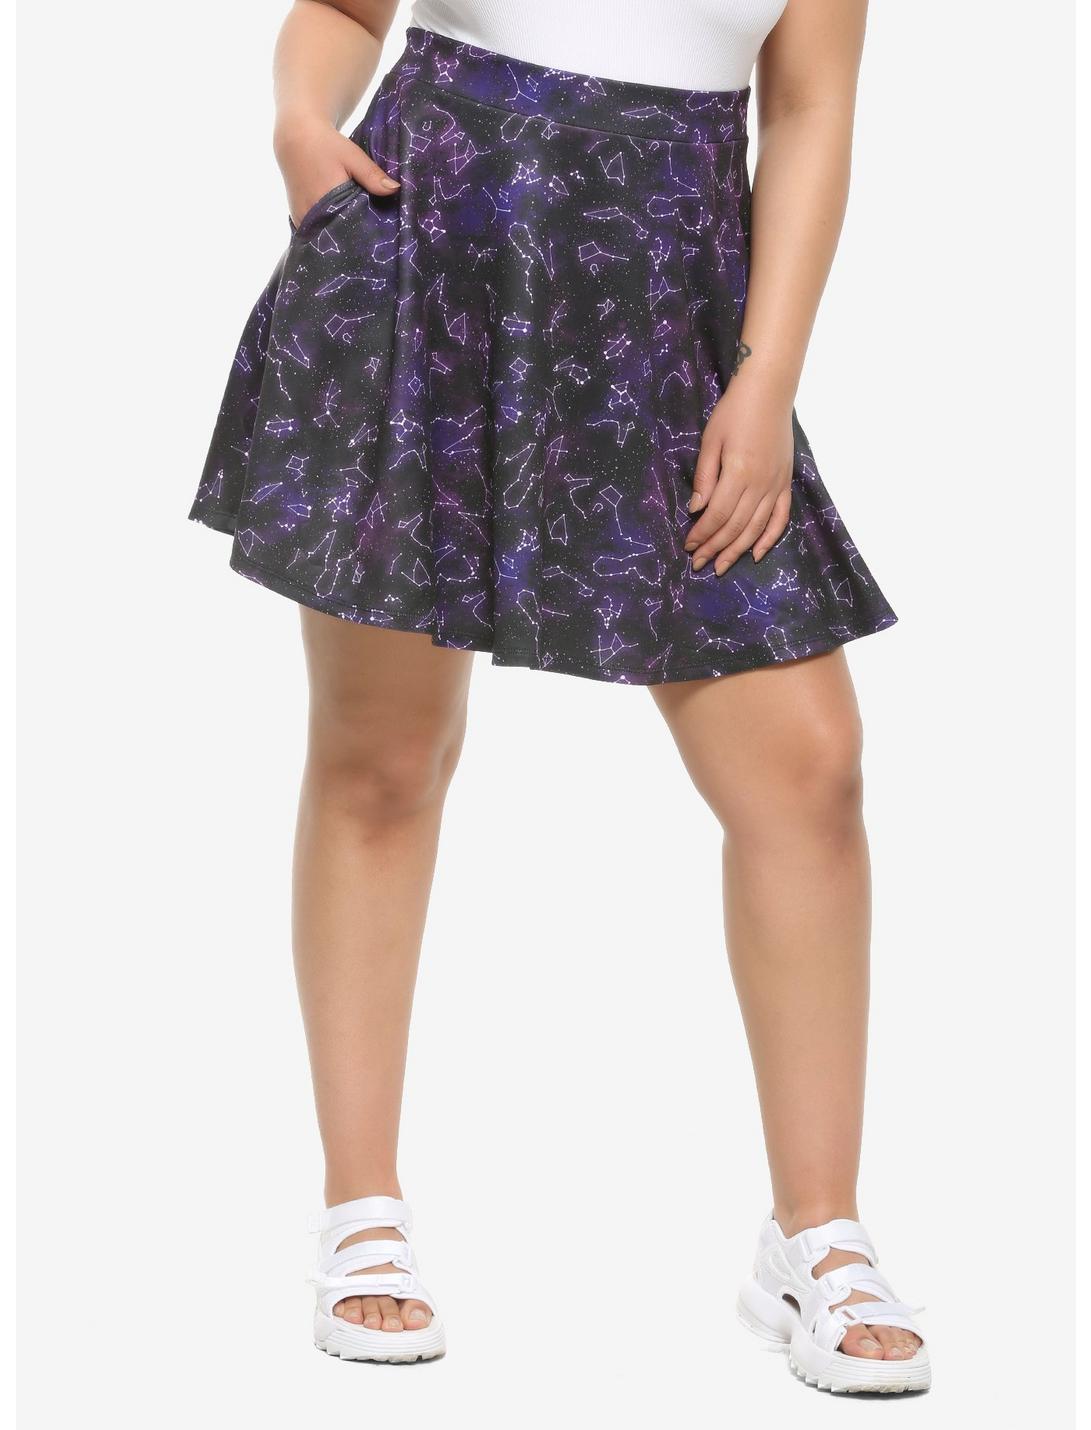 Constellation Print Skater Skirt Plus Size, GALAXY, hi-res